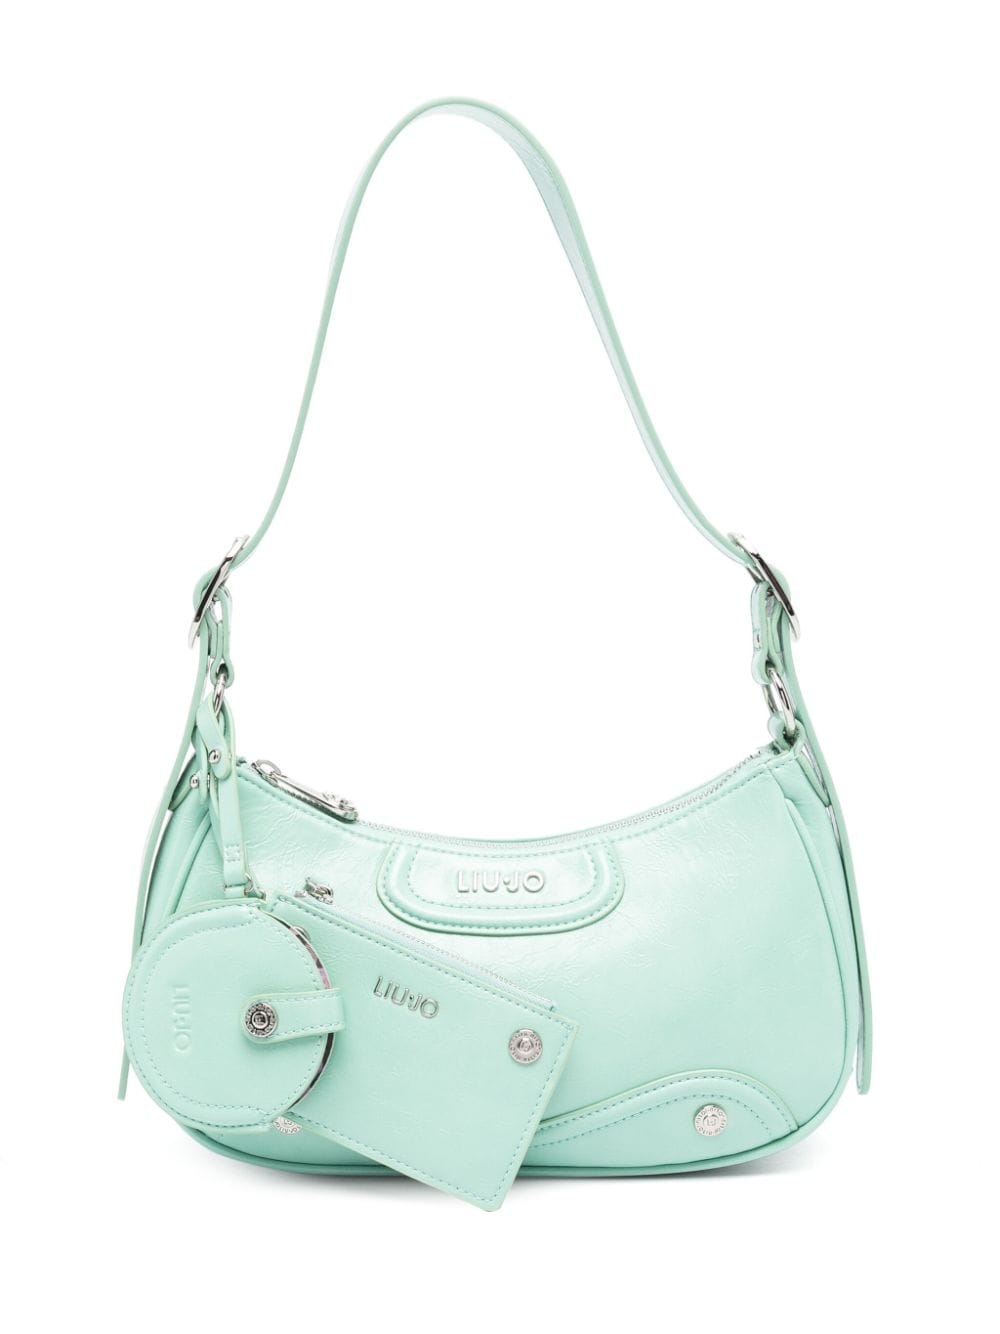 LIU JO detachable-wallet shoulder bag - Green von LIU JO